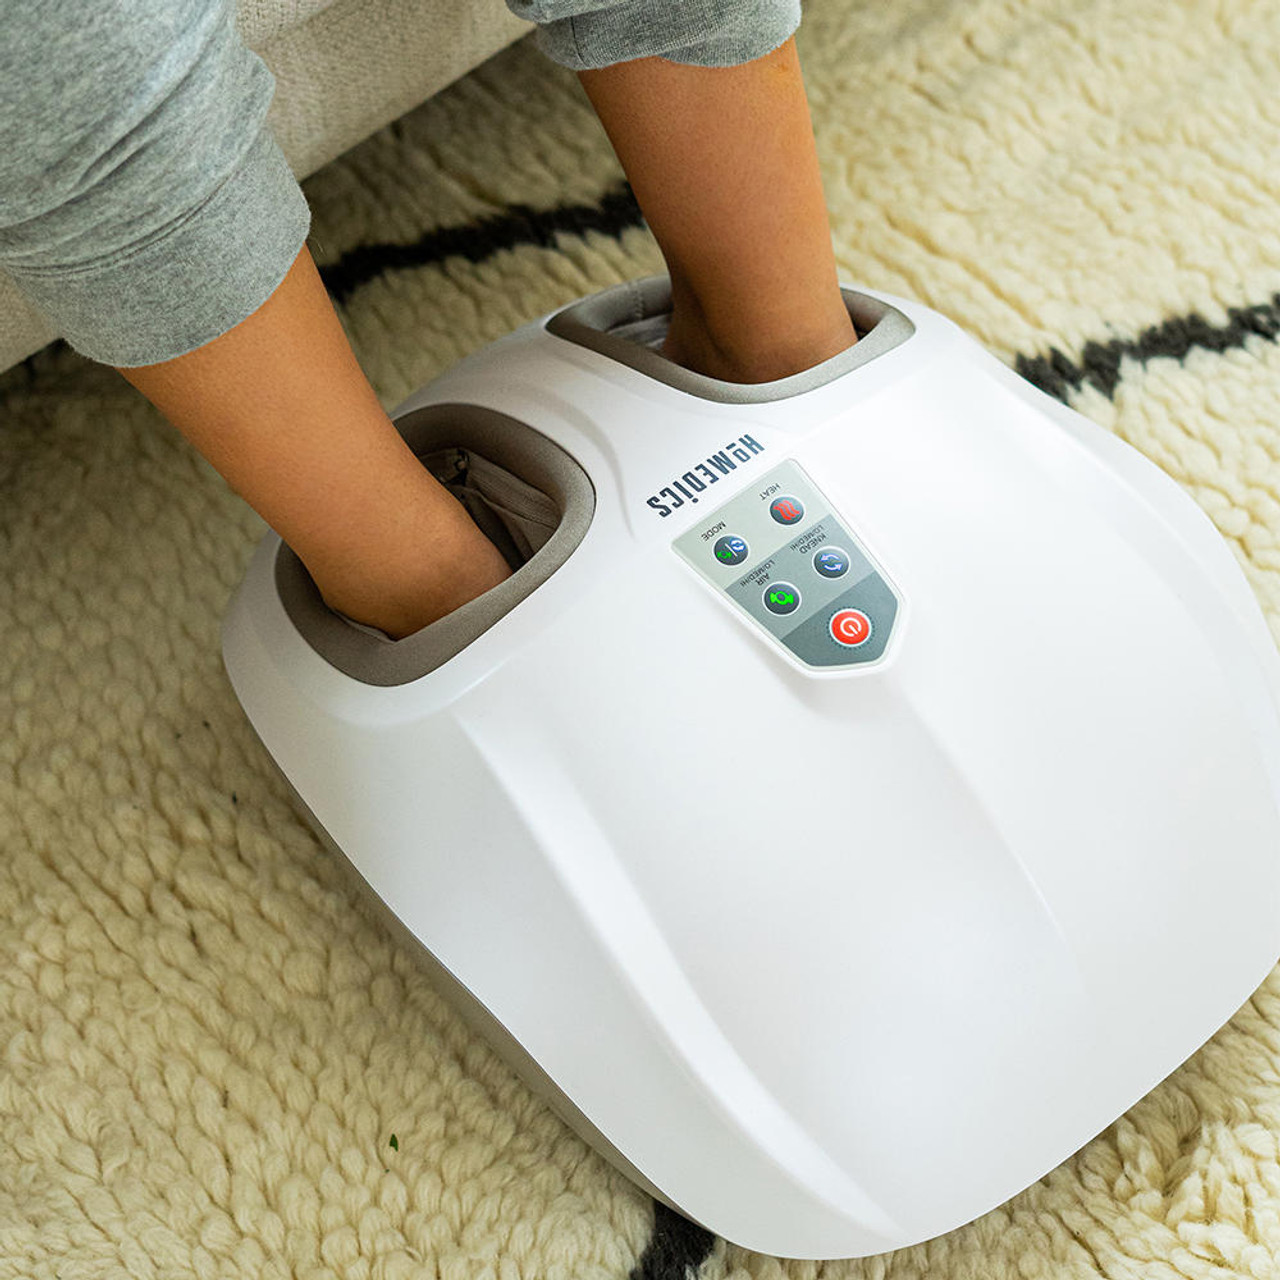 HoMedics Shiatsu Air 3.0 Foot Massager with Heat and Remote